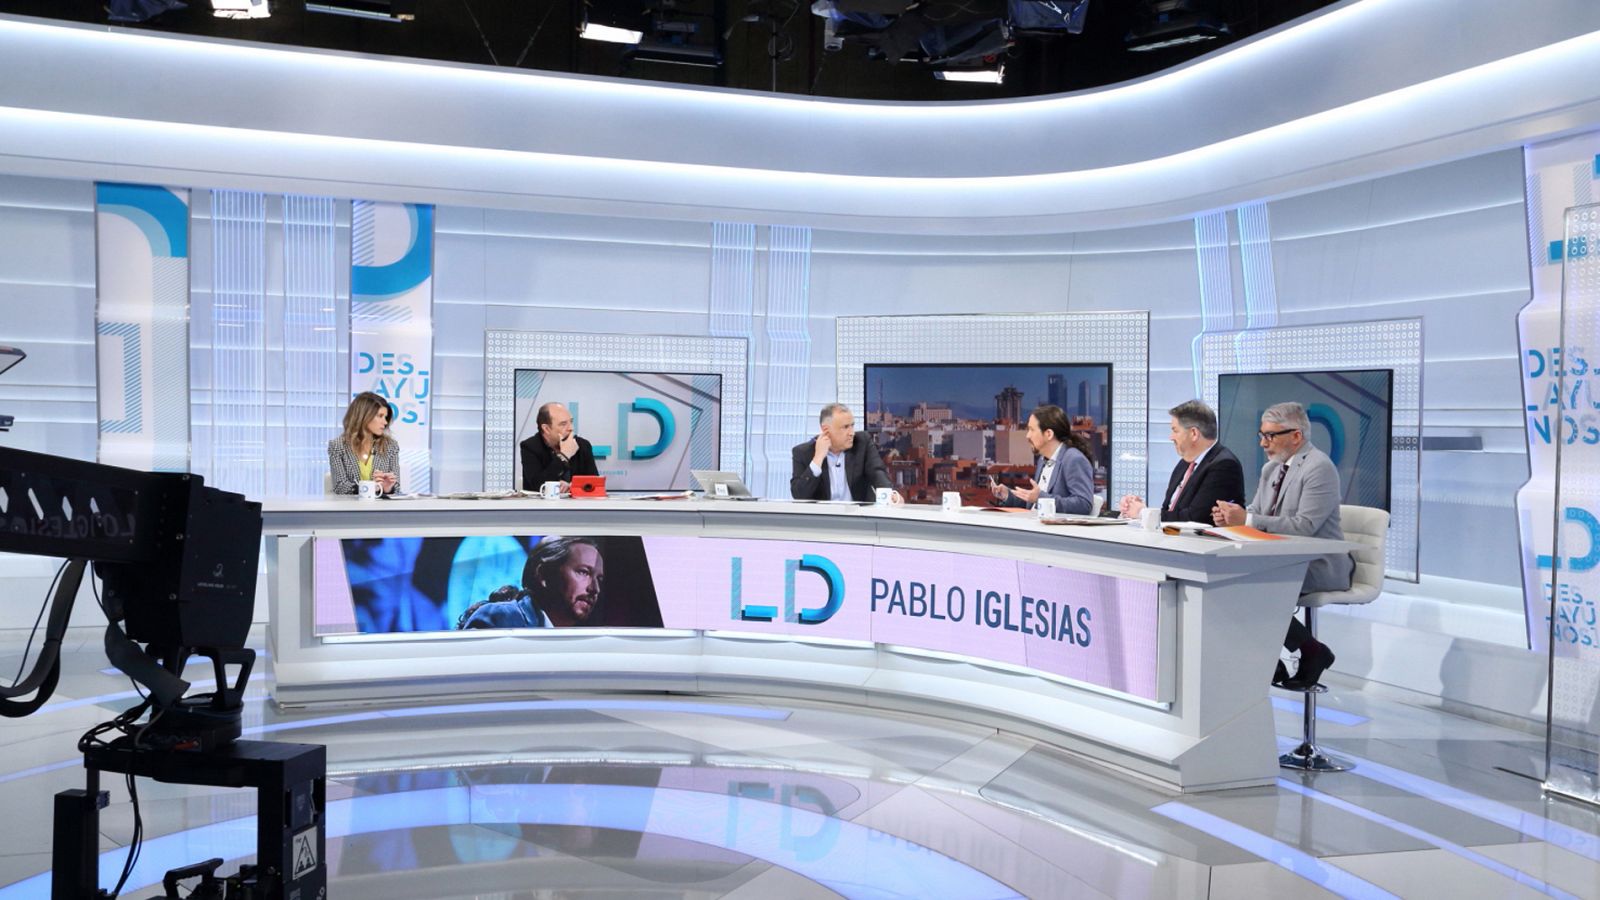 Iglesias sobre la mesa de diálogo con Cataluña: "Vamos a afrontar un problema político dialogando" - RTVE.es